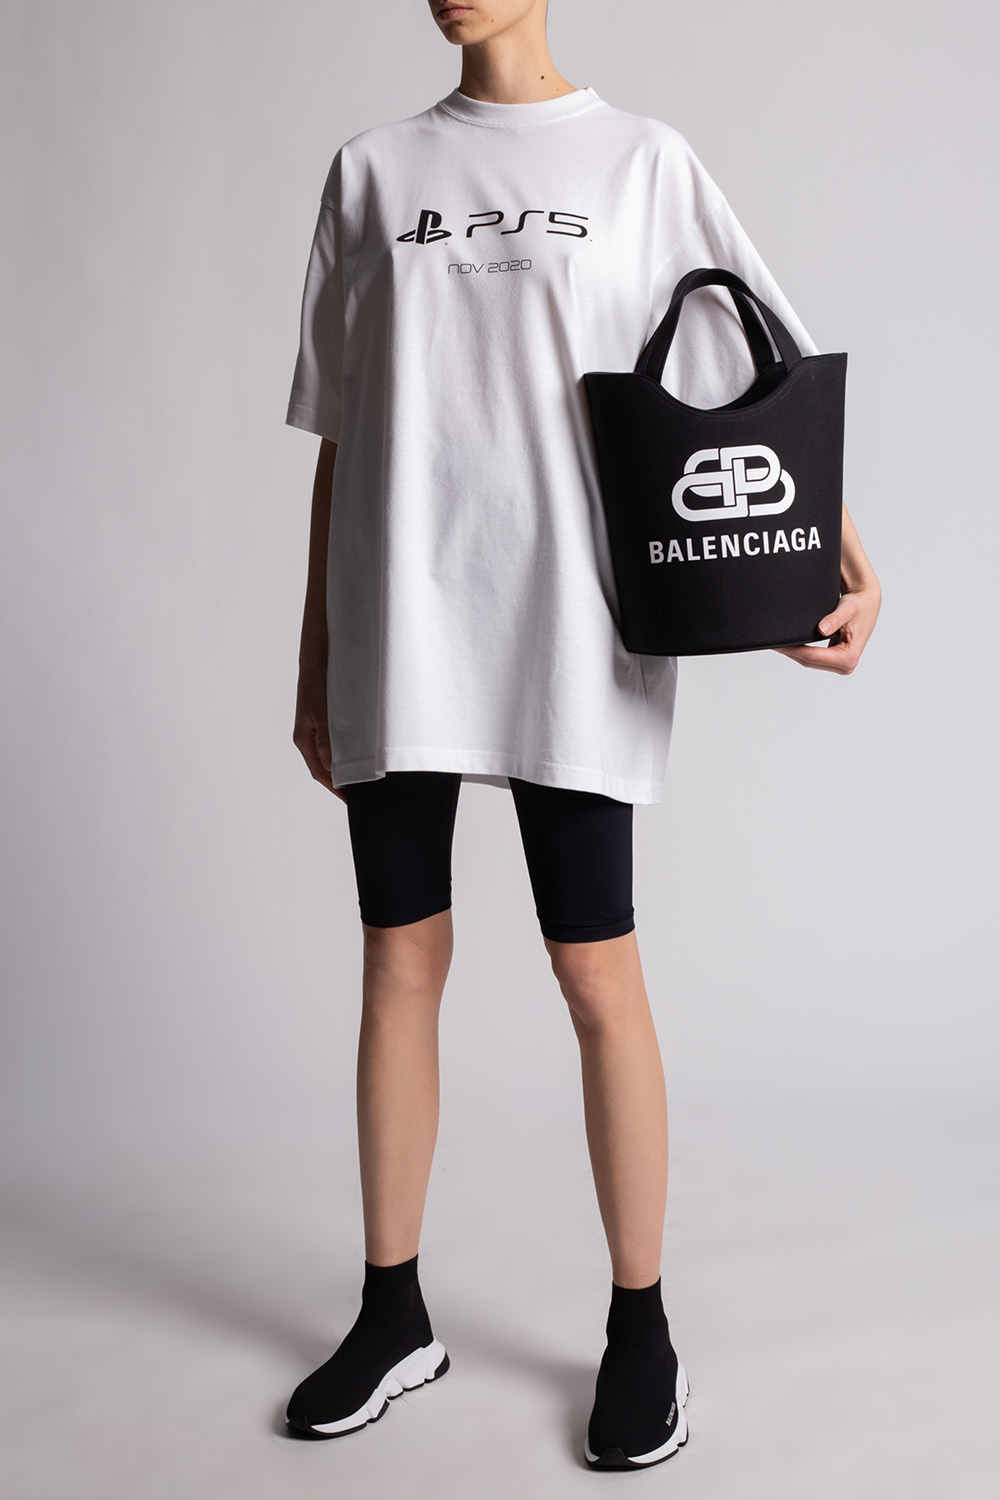 Textile upper with leather cap toe and heel  InteragencyboardShops Norway   Balenciaga x PS5 Balenciaga